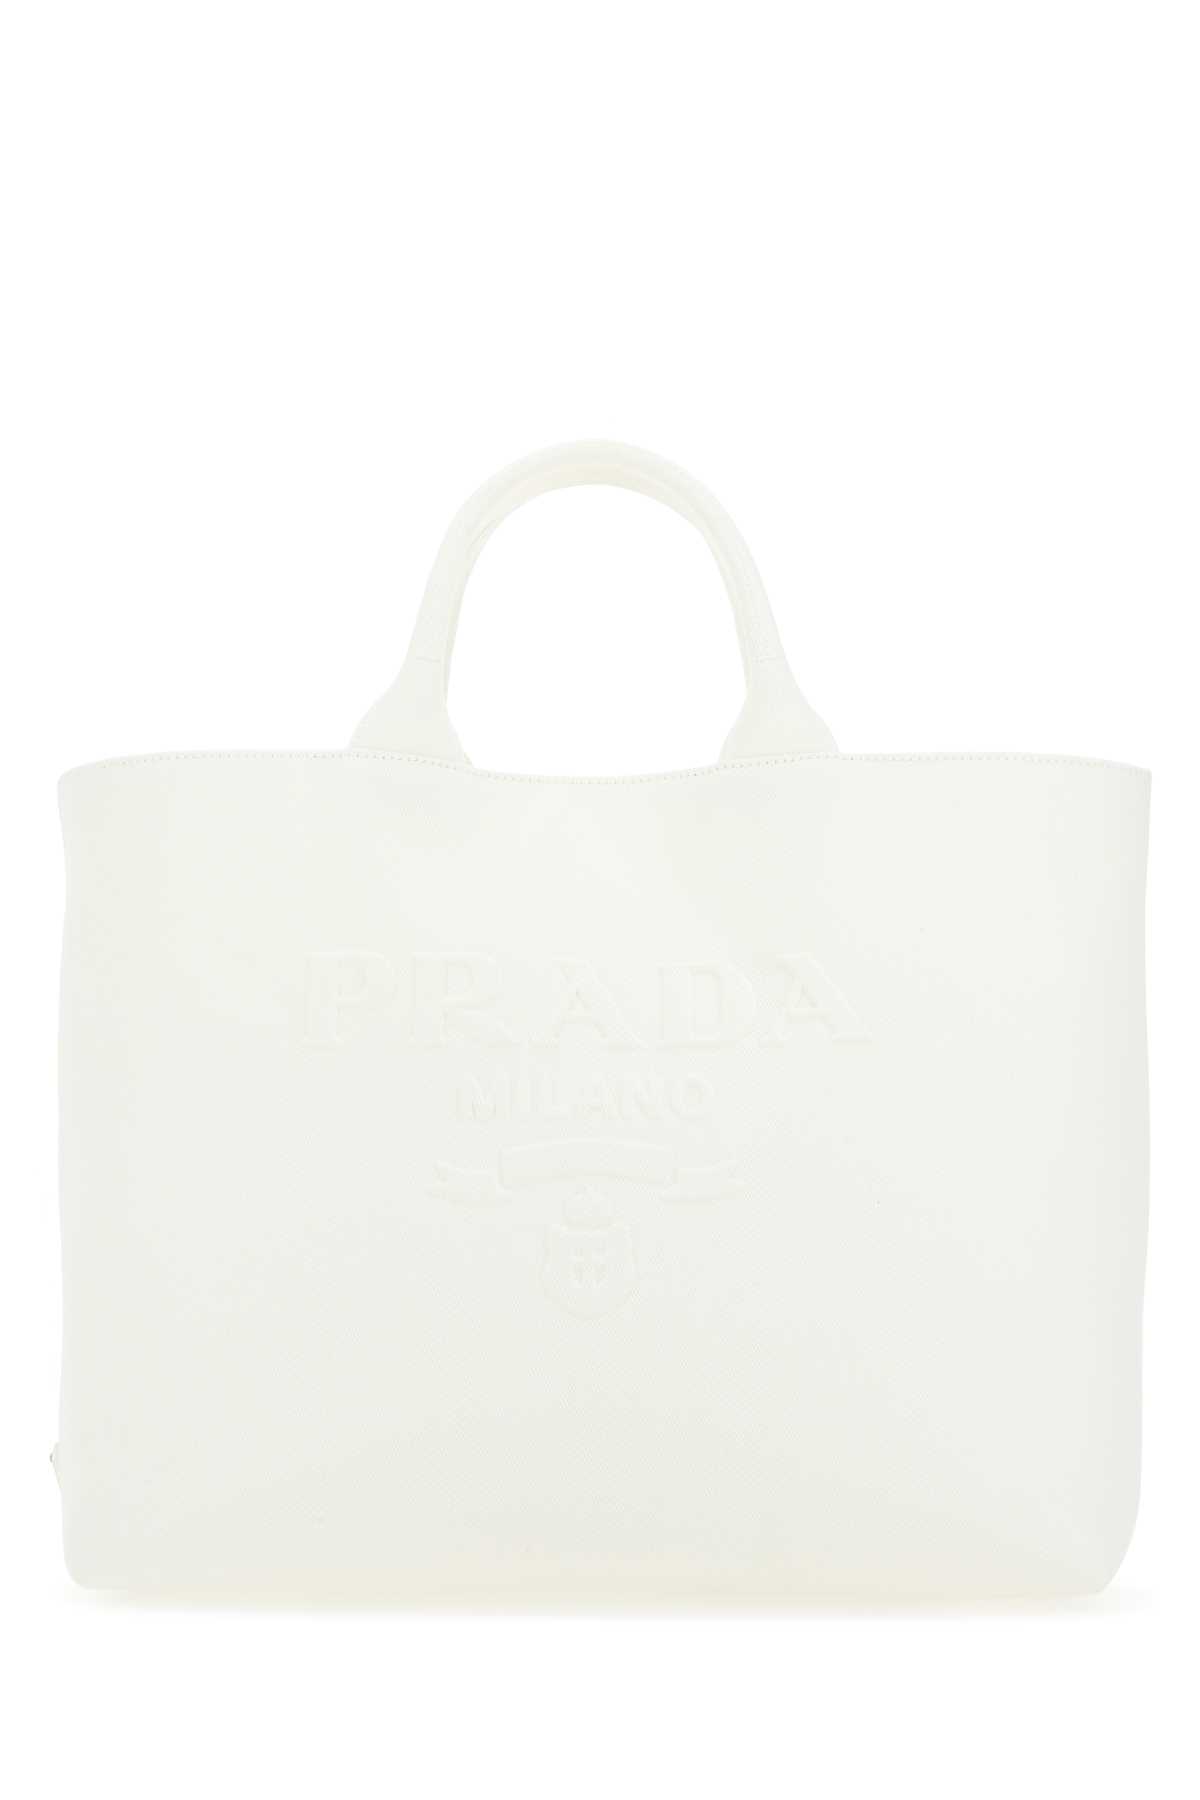 Prada White Canvas Handbag